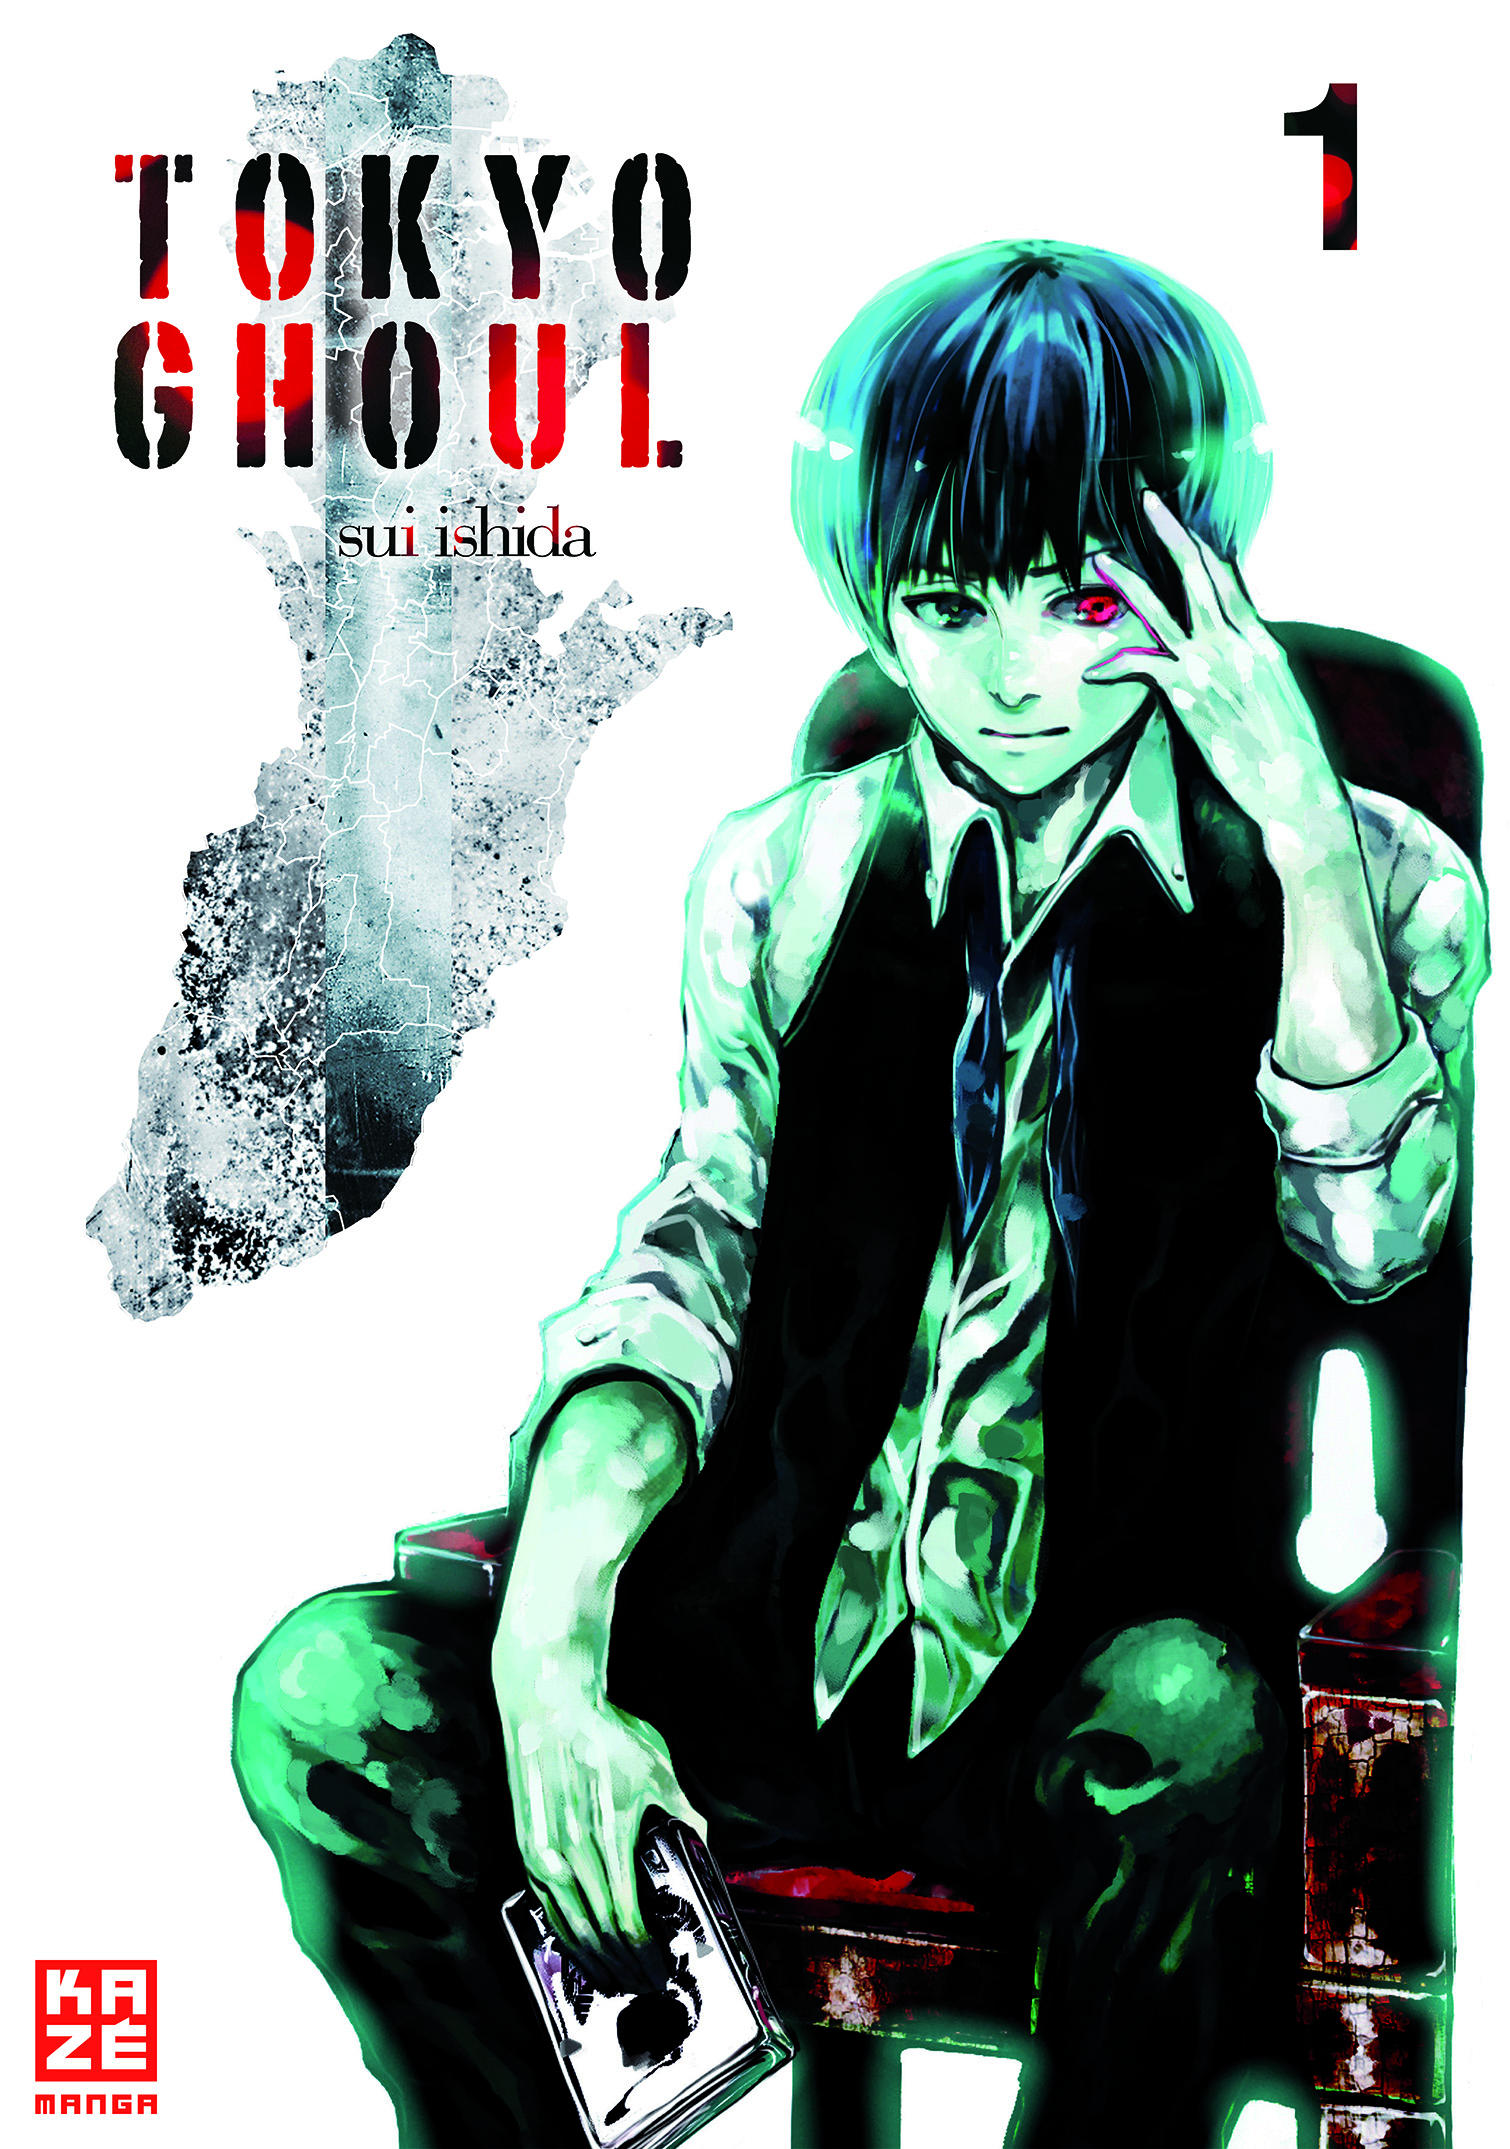 Band Tokyo 1 – Ghoul